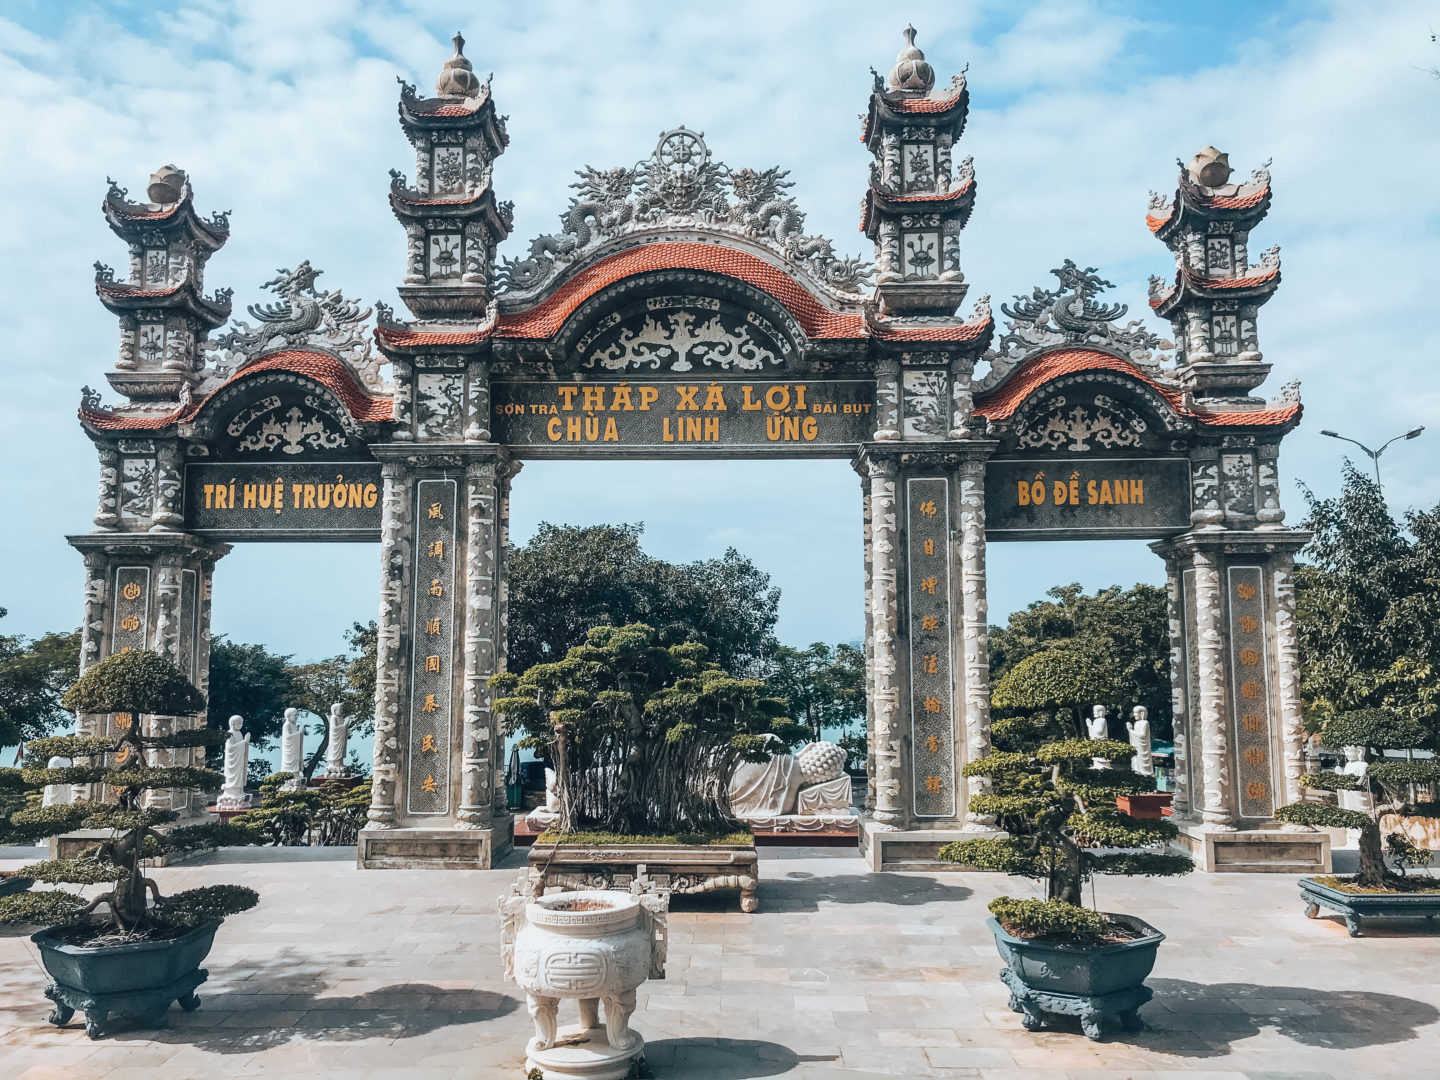 Vietnam Architecture Chua Linh Ung Pagoda Da Nang 1440x1080 